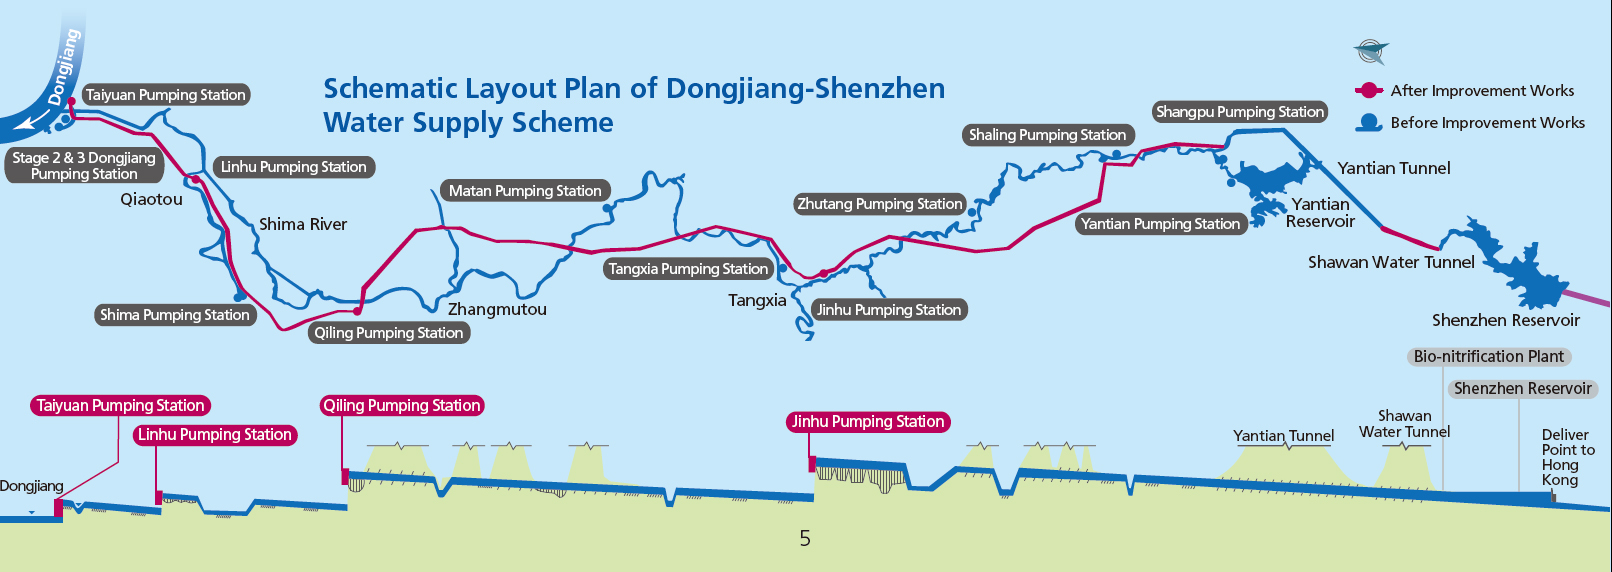 Schematic Layout Plan of Dongjiang-Shenzhen Water Supply Scheme